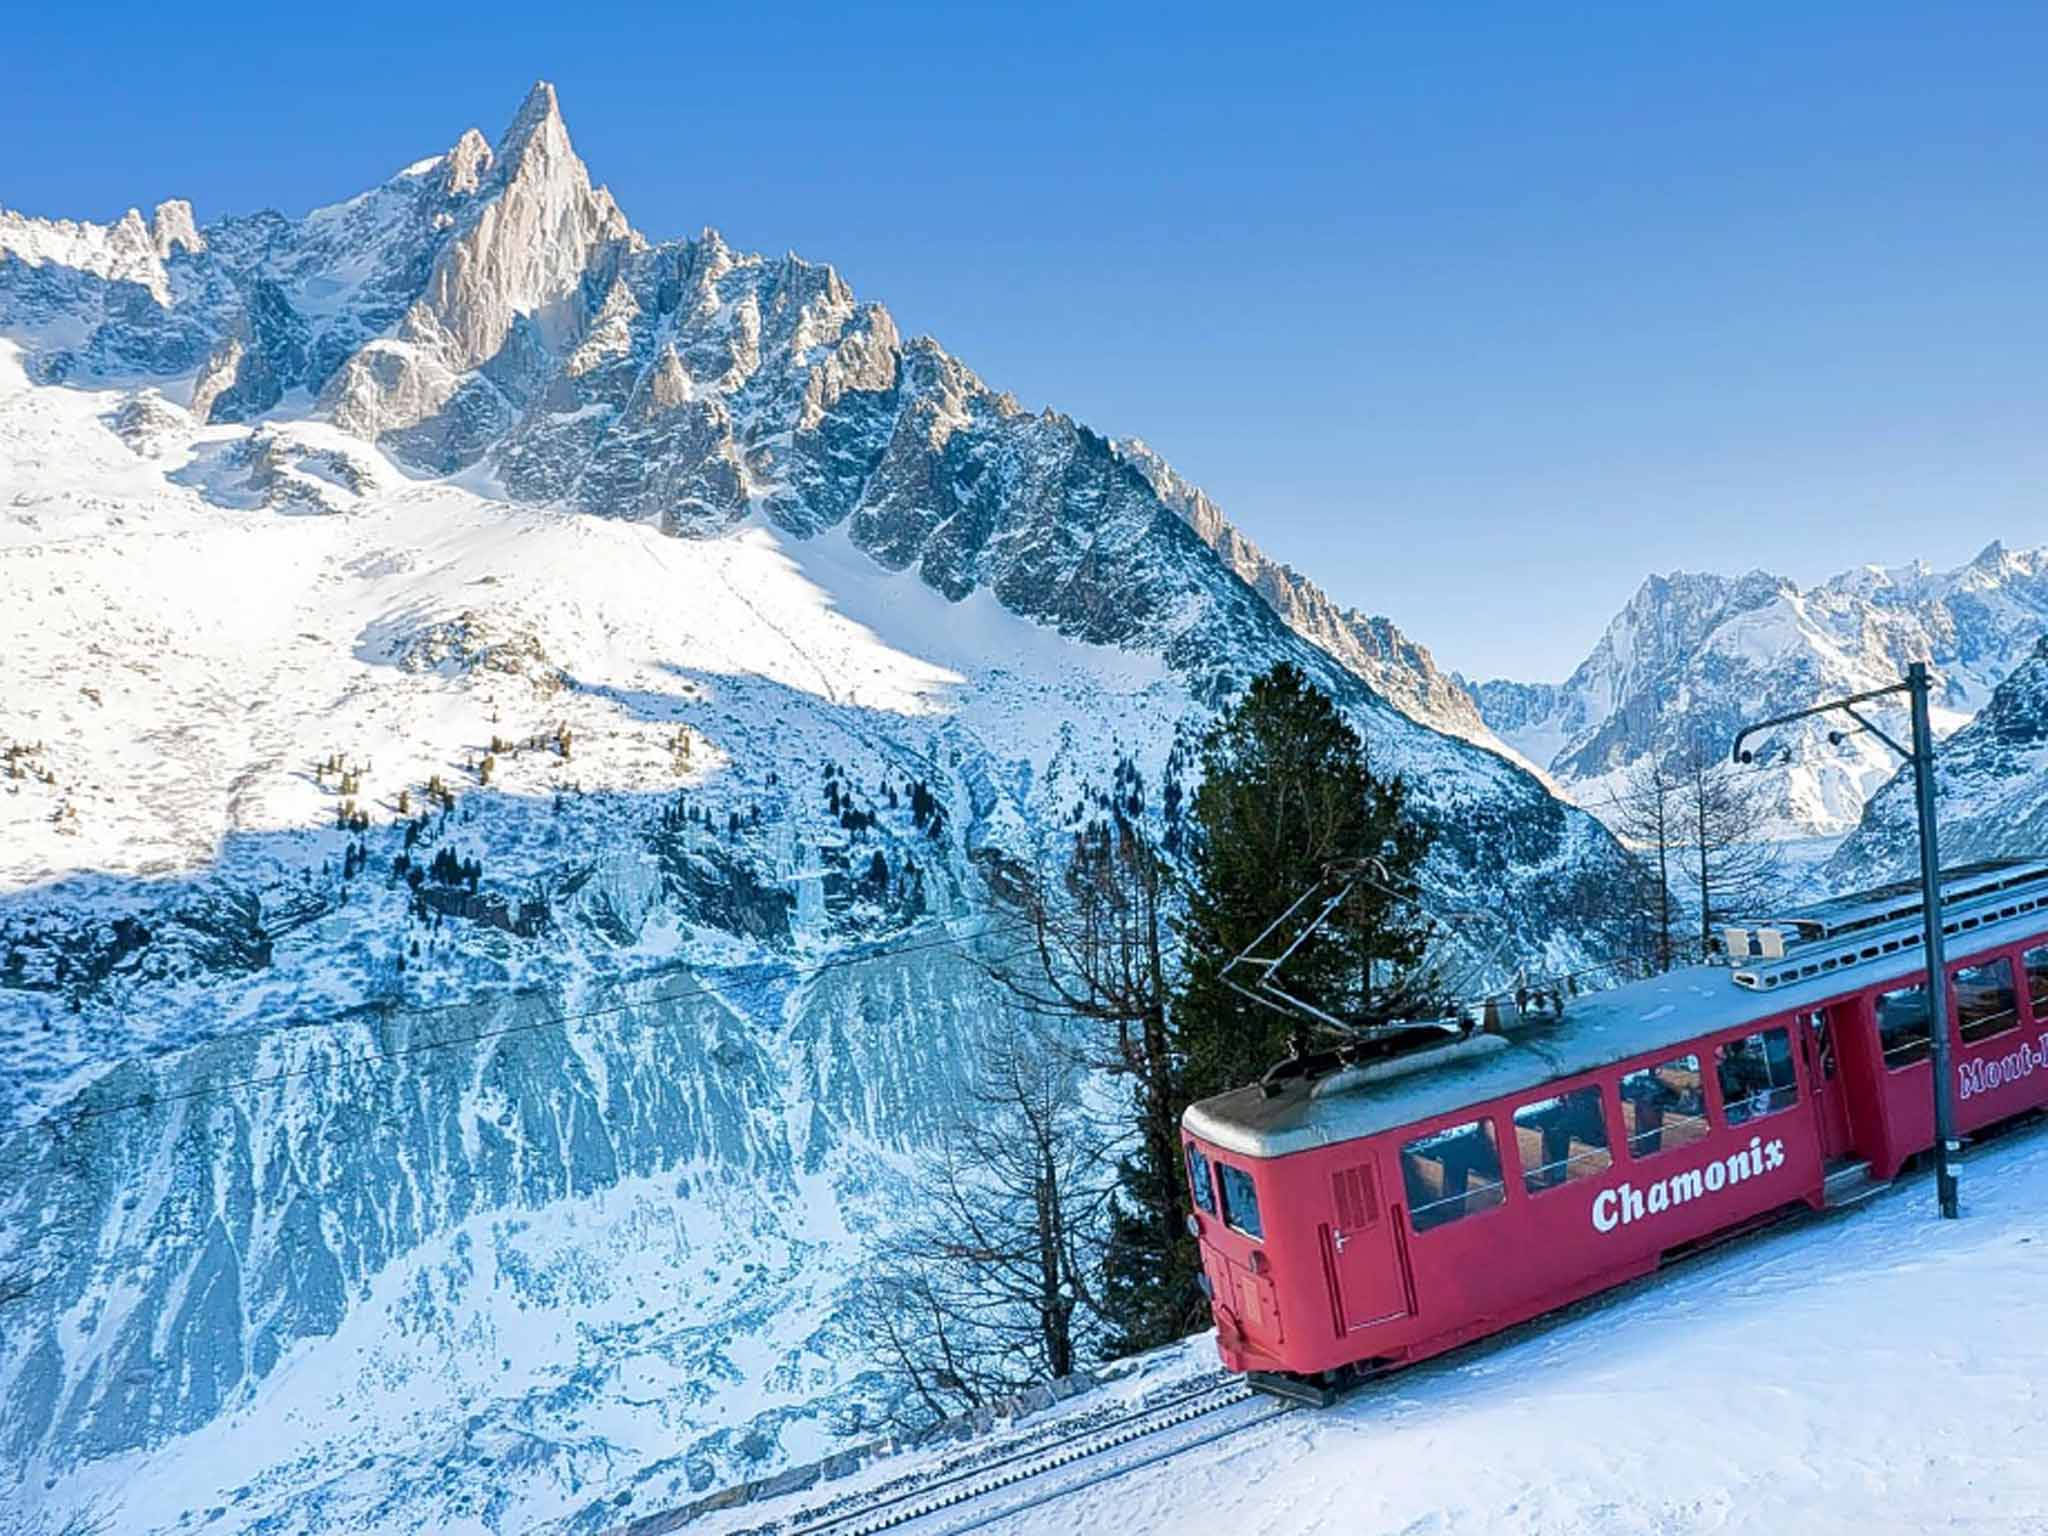 Chamonix offers skiers a free ride